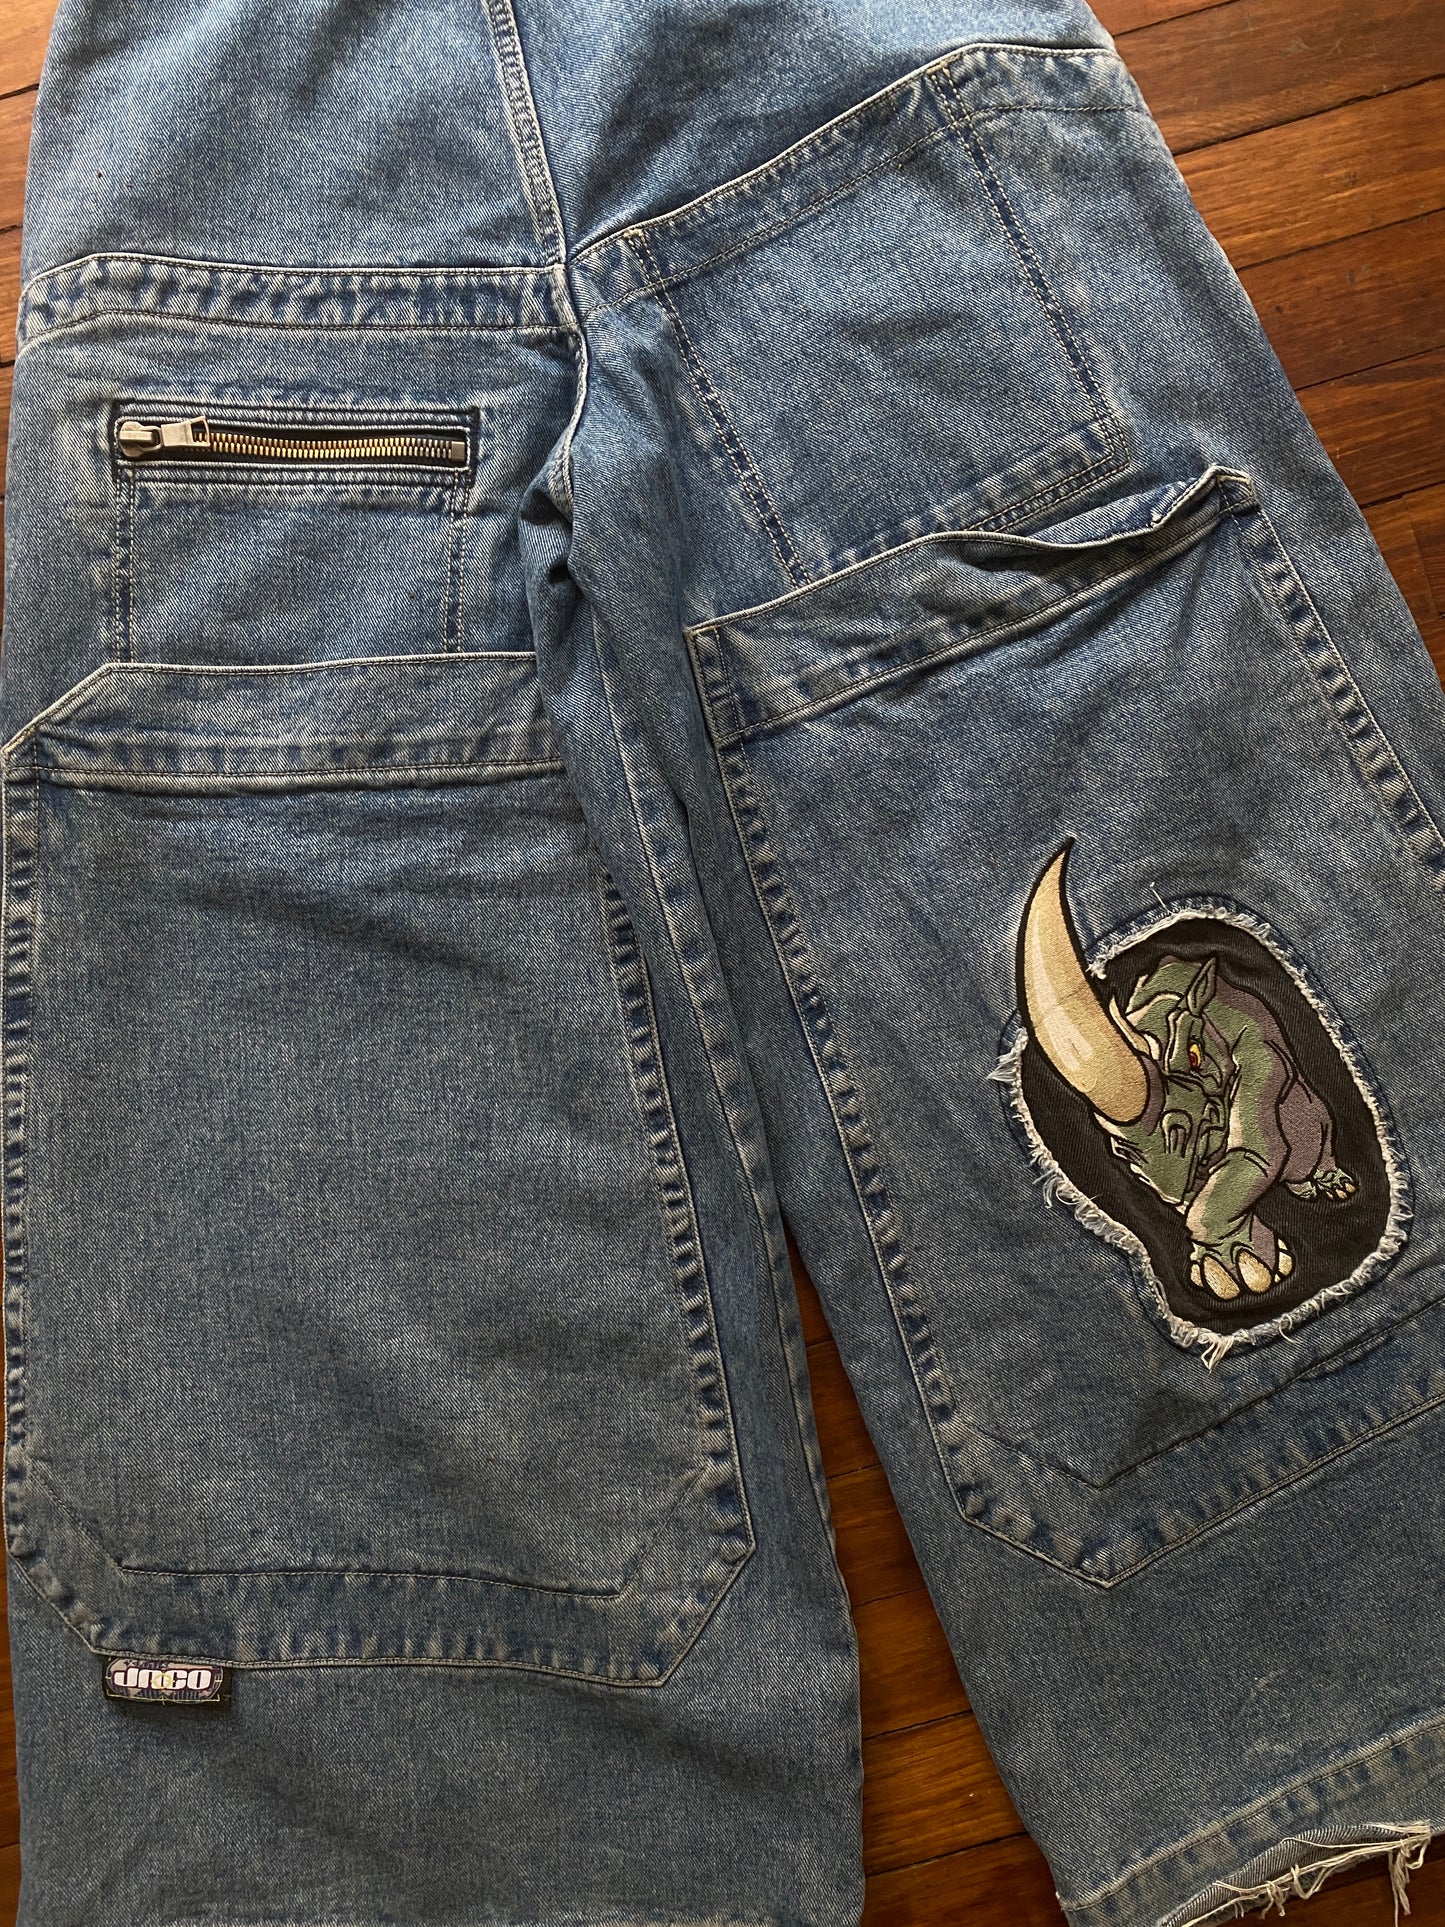 JNCO Rhino Vintage Jeans - 30